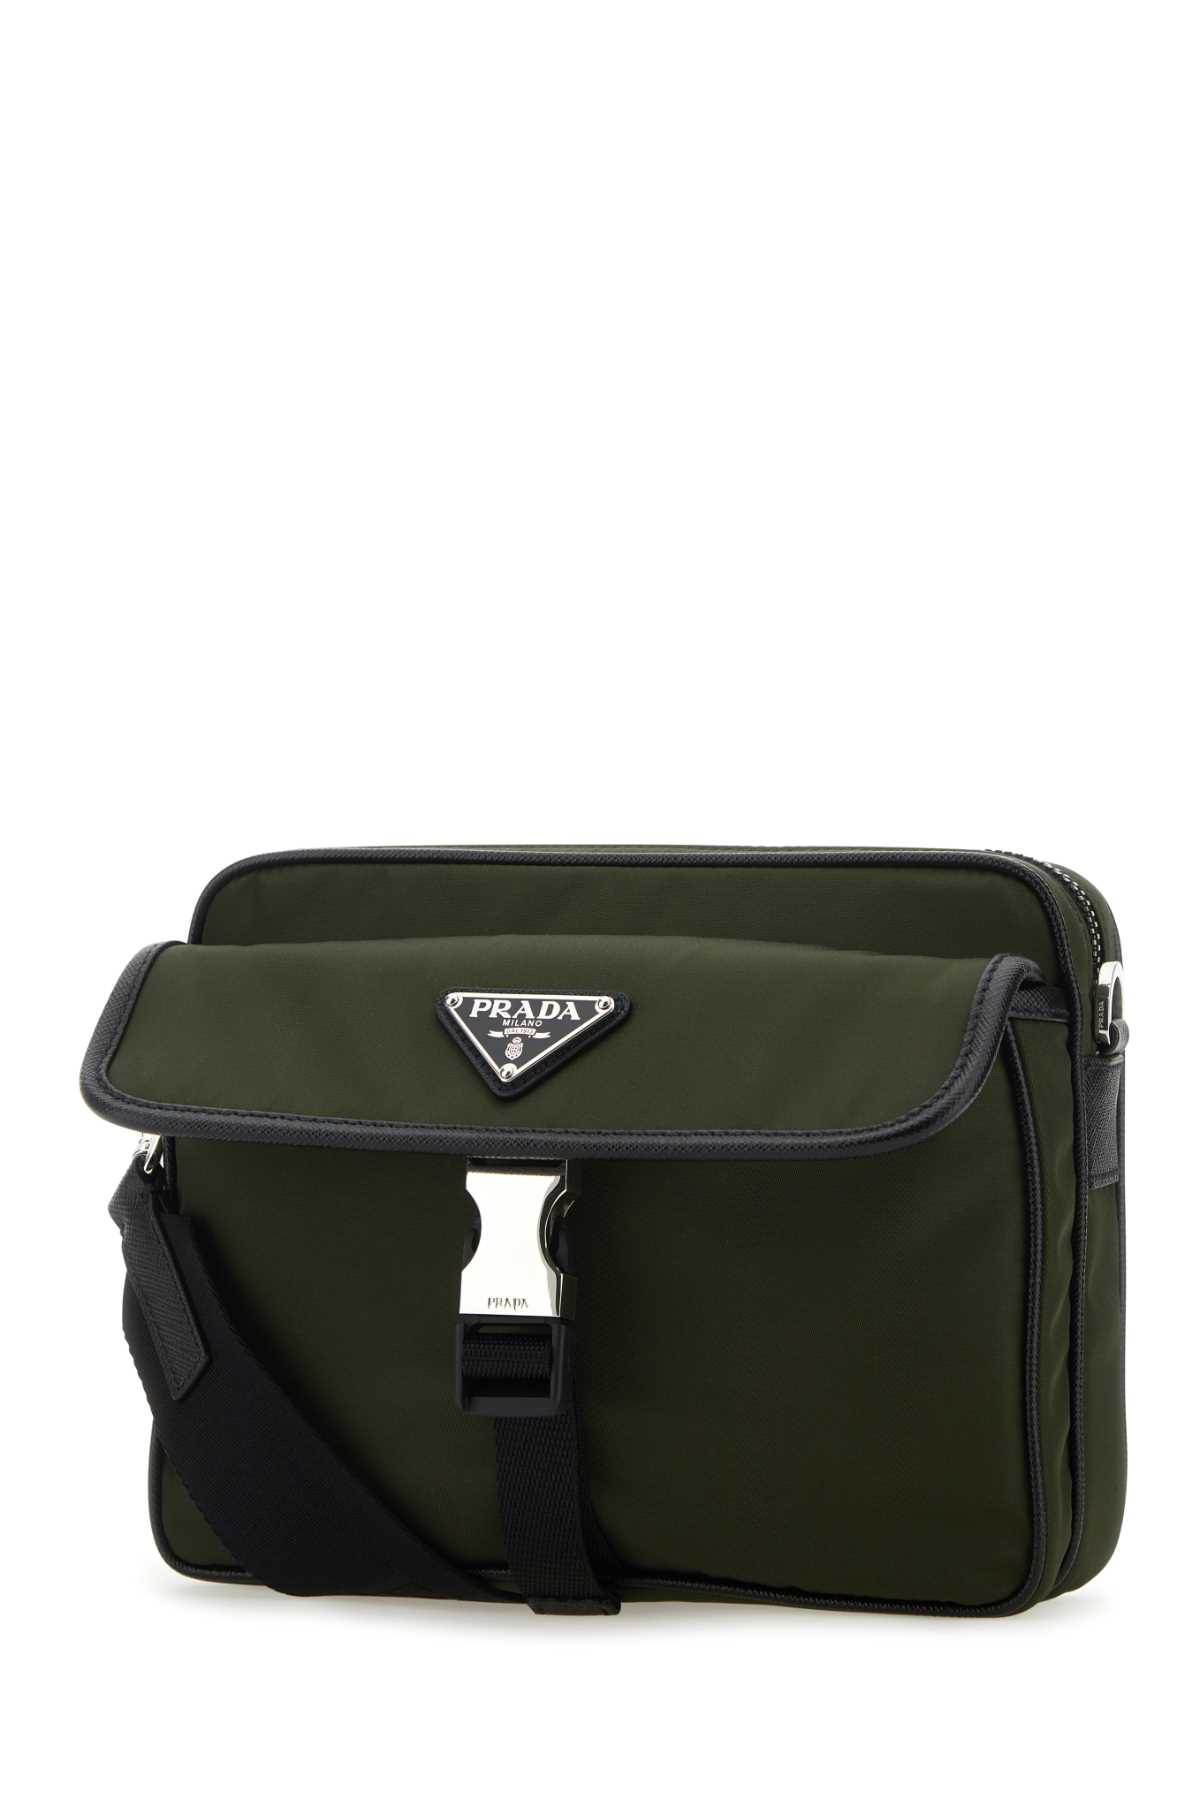 Prada Army Green Nylon Crossbody Bag In F0244